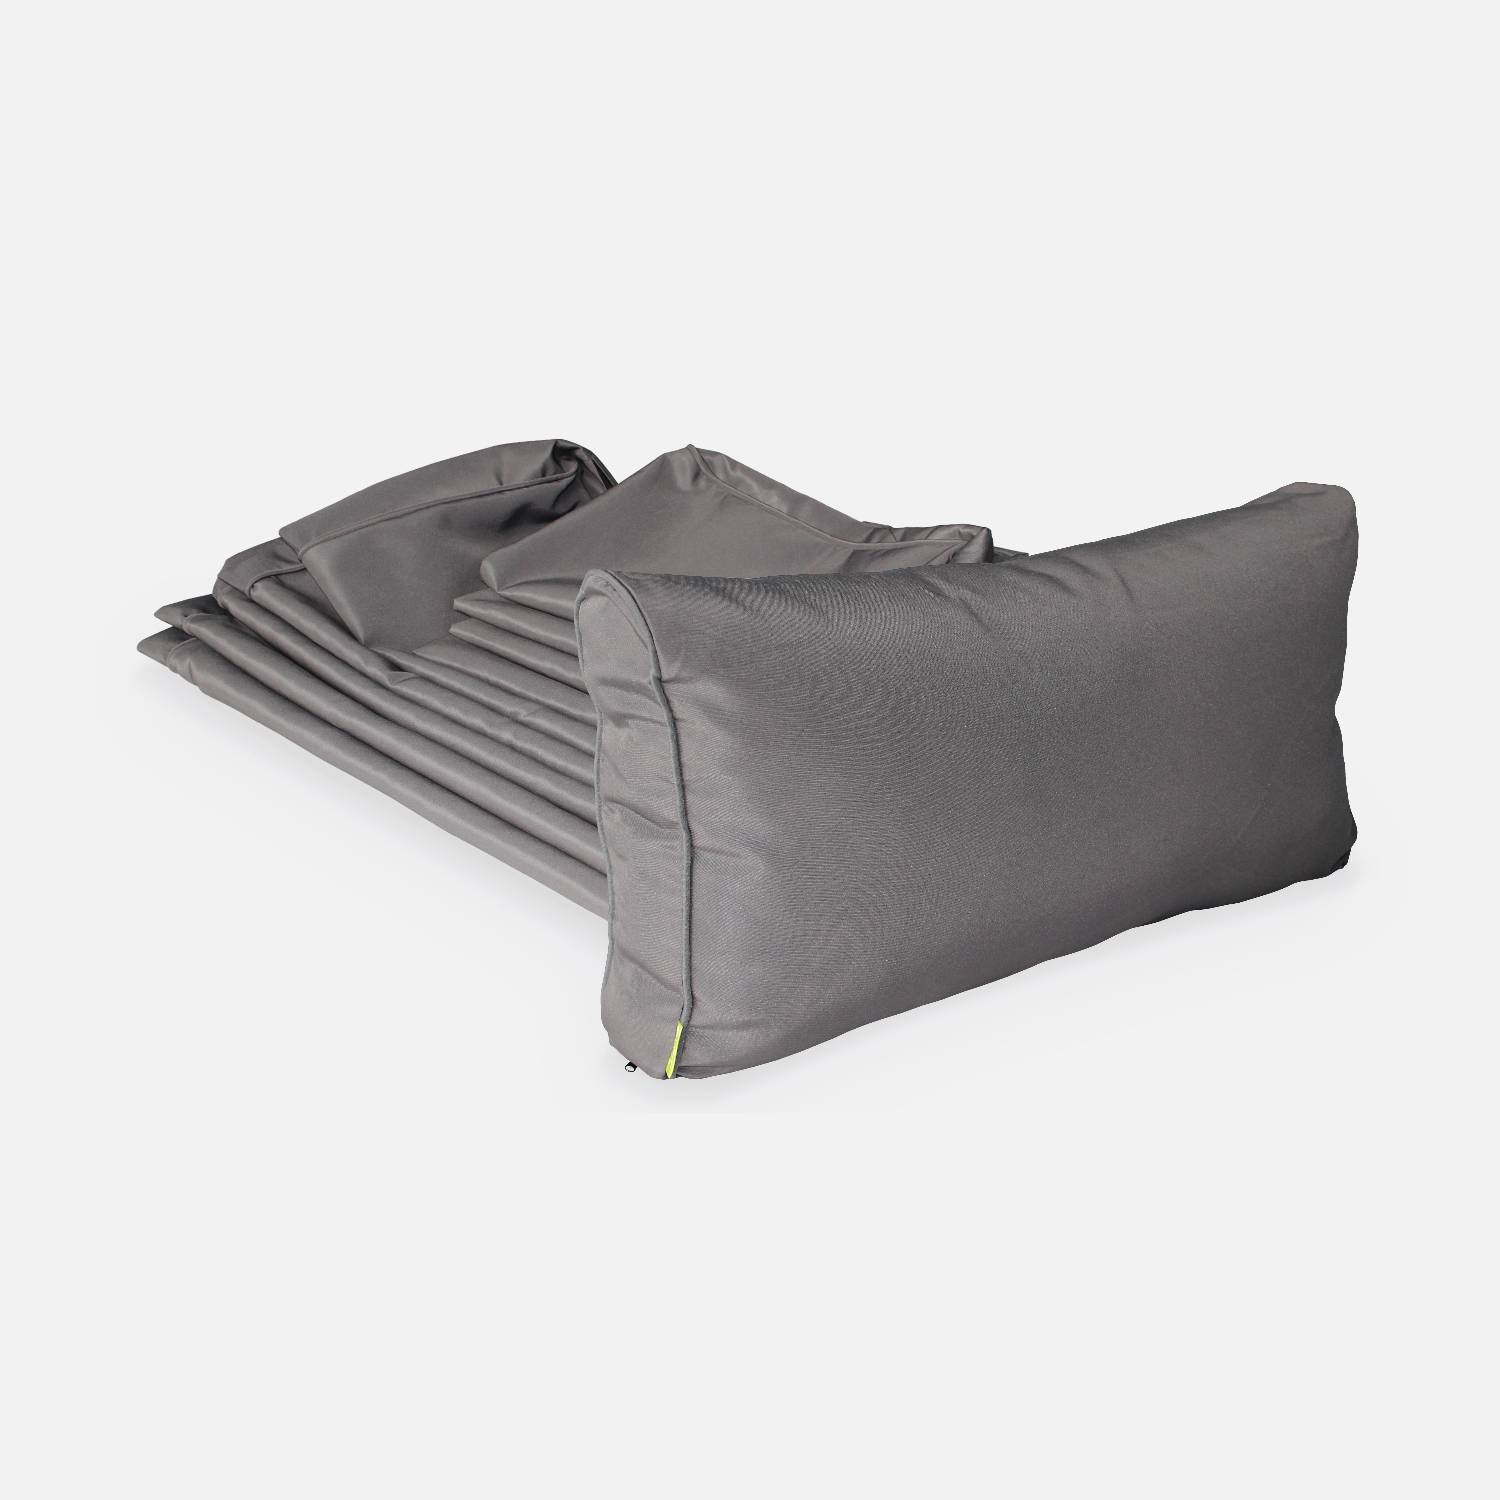 Grey cushion cover set for Milano garden set - complete set Photo1